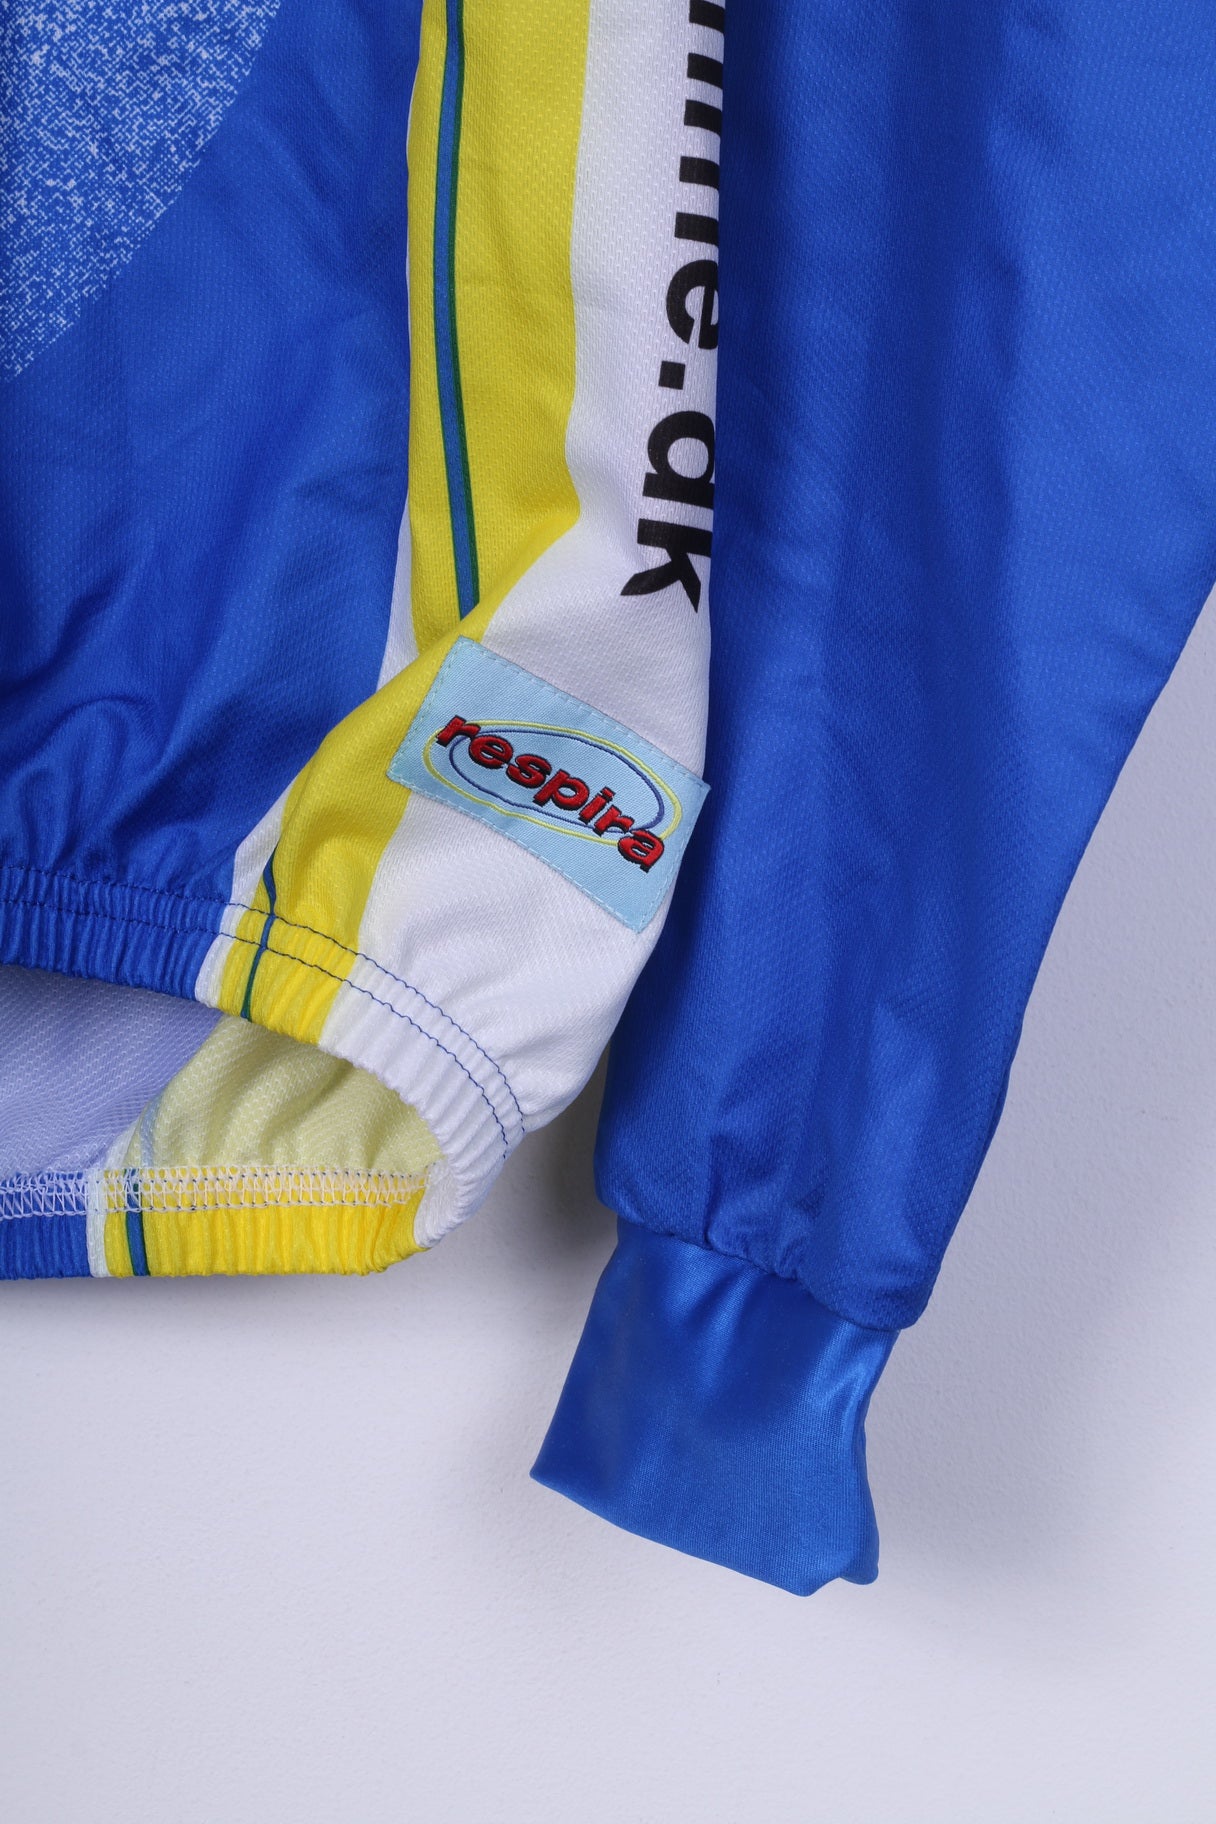 Giacca da bici XL da uomo Biemme Top da ciclismo leggero con cerniera blu